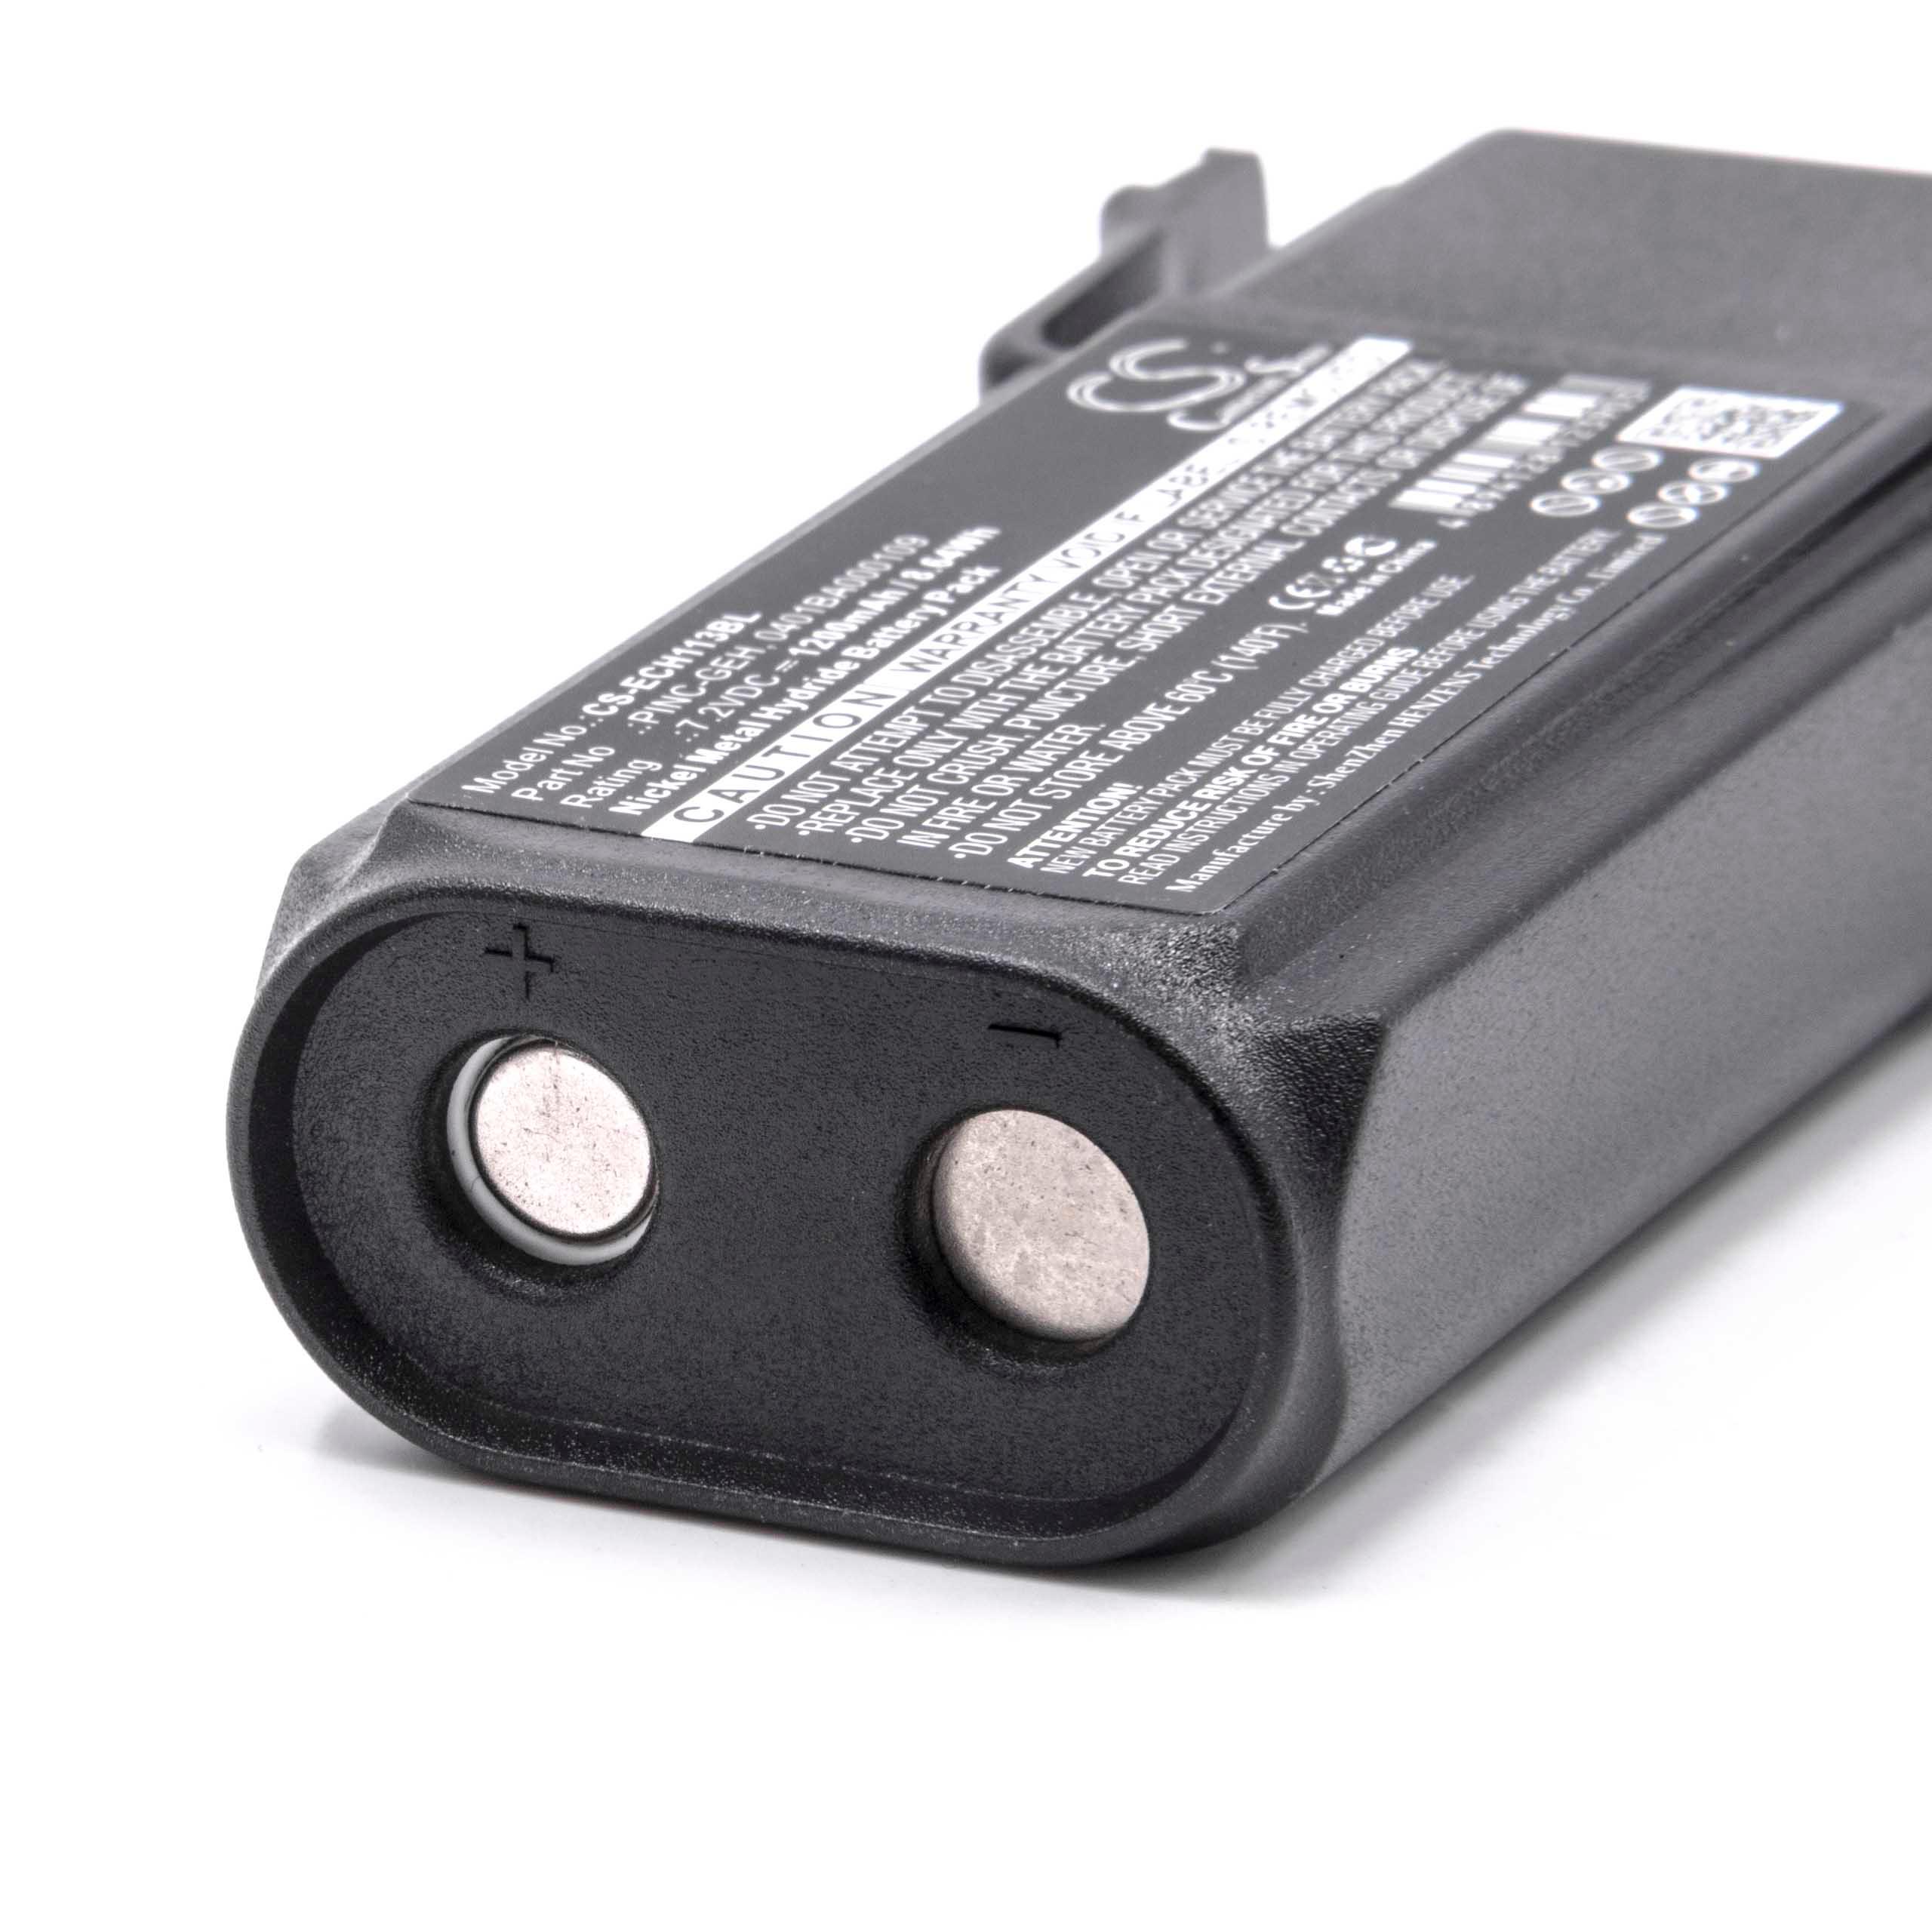 Remote Control Battery Replacement for Elca 0401BA000109, 0401BA000113, PINC-GEH, 04.142 - 1200mAh 7.2V NiMH